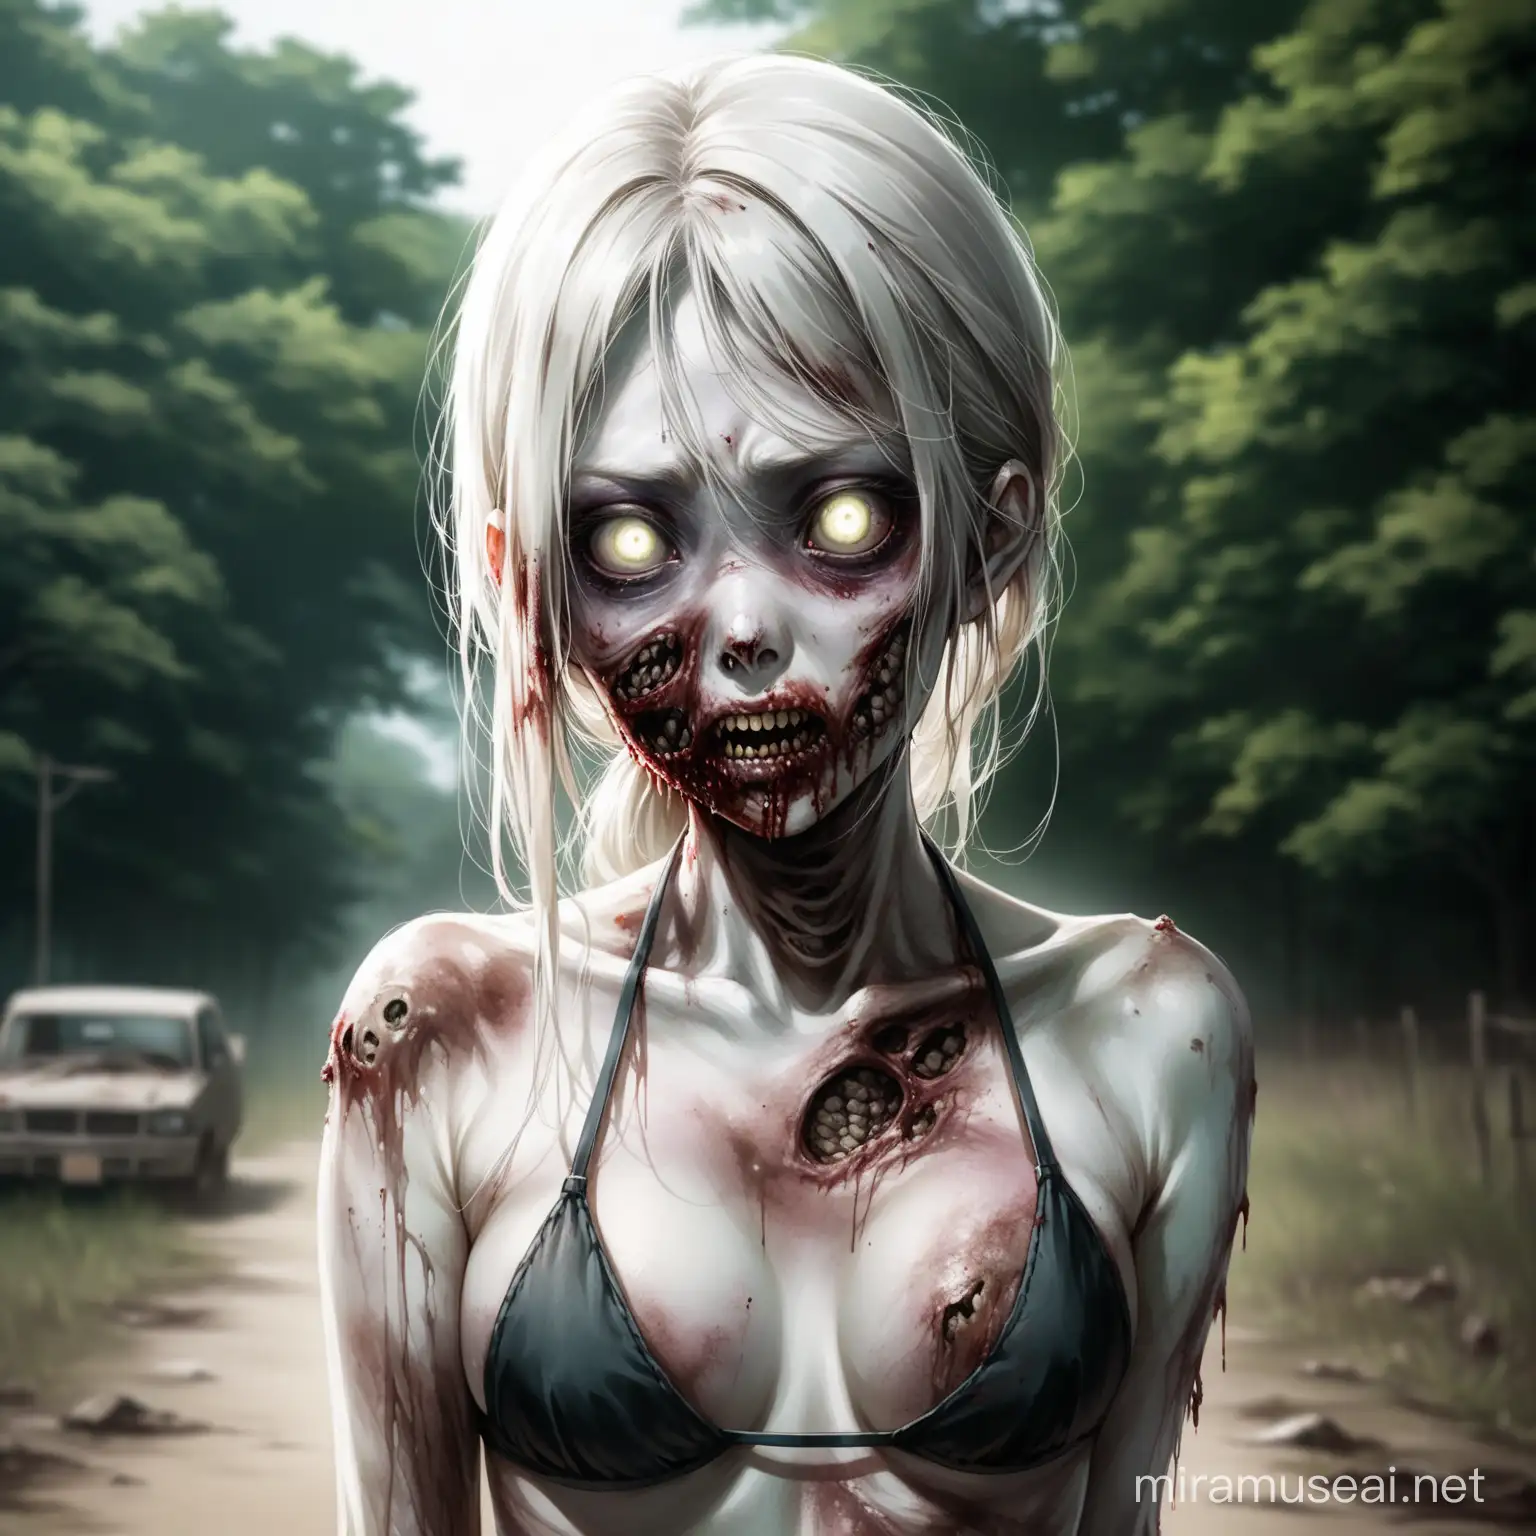 Decaying South Korean Zombie Girl Walking Dead Style in Bikini